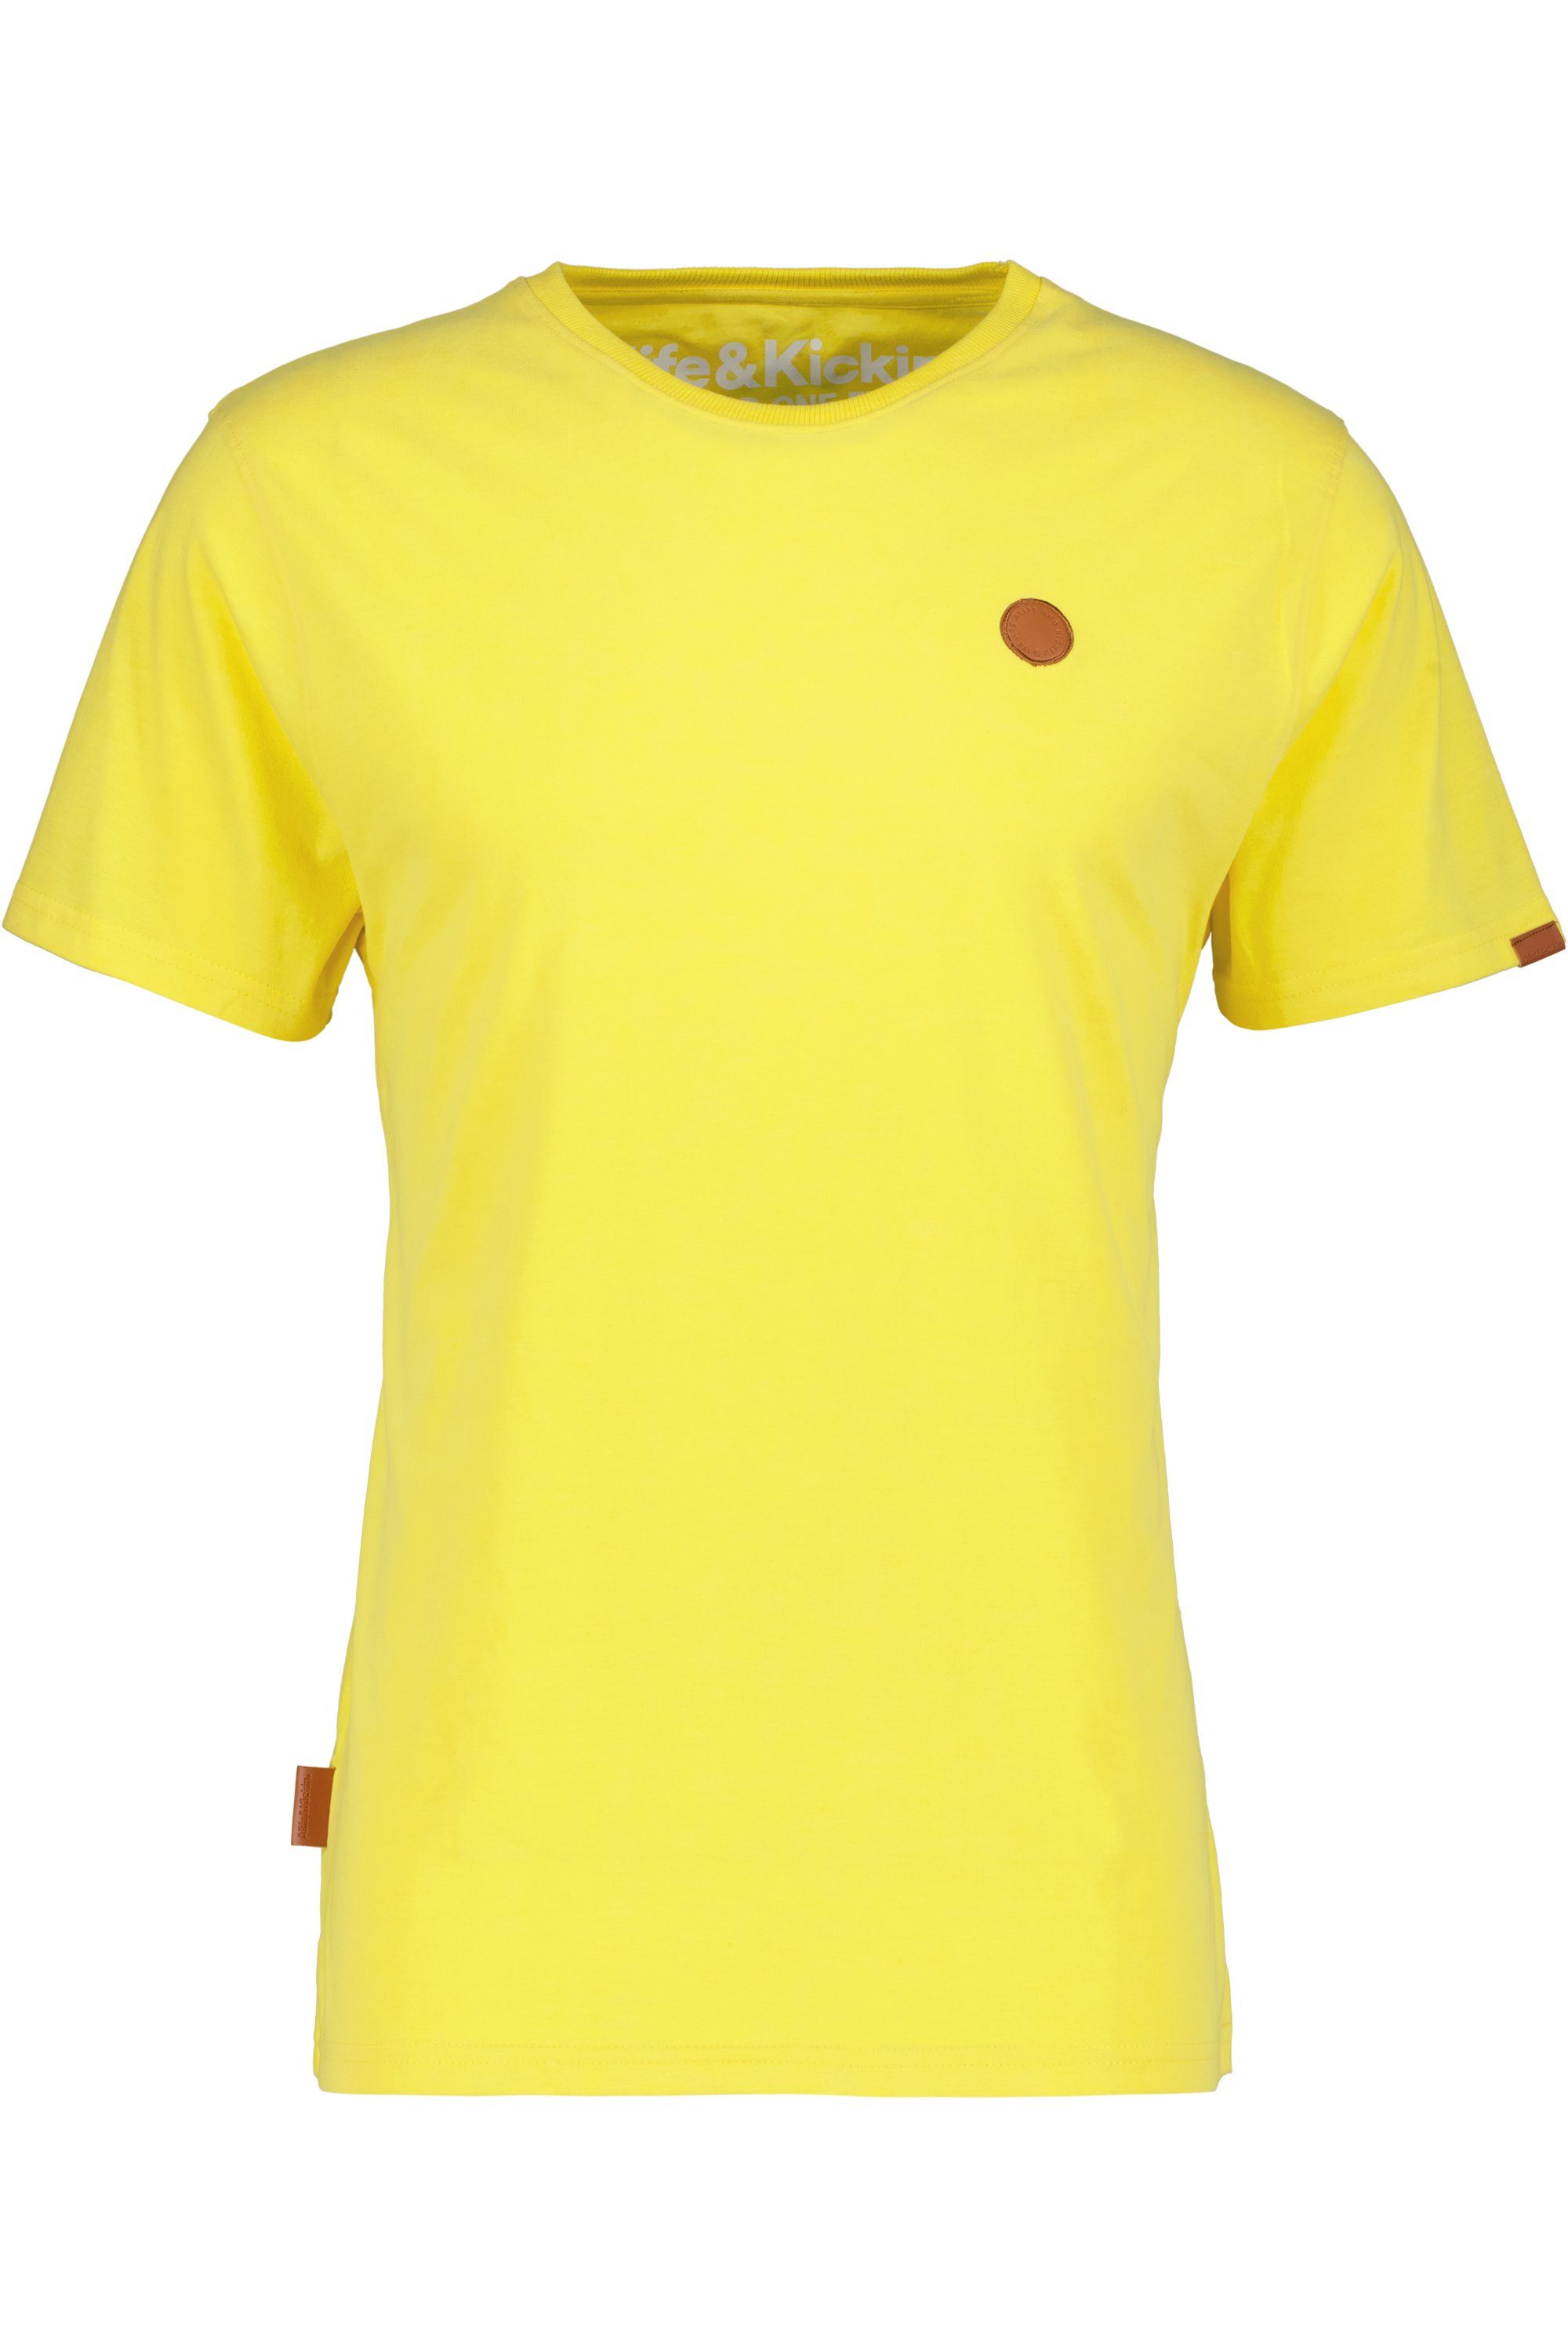 Alife & Kickin Shirt Herren T-Shirt MaddoxAK T-Shirt citron